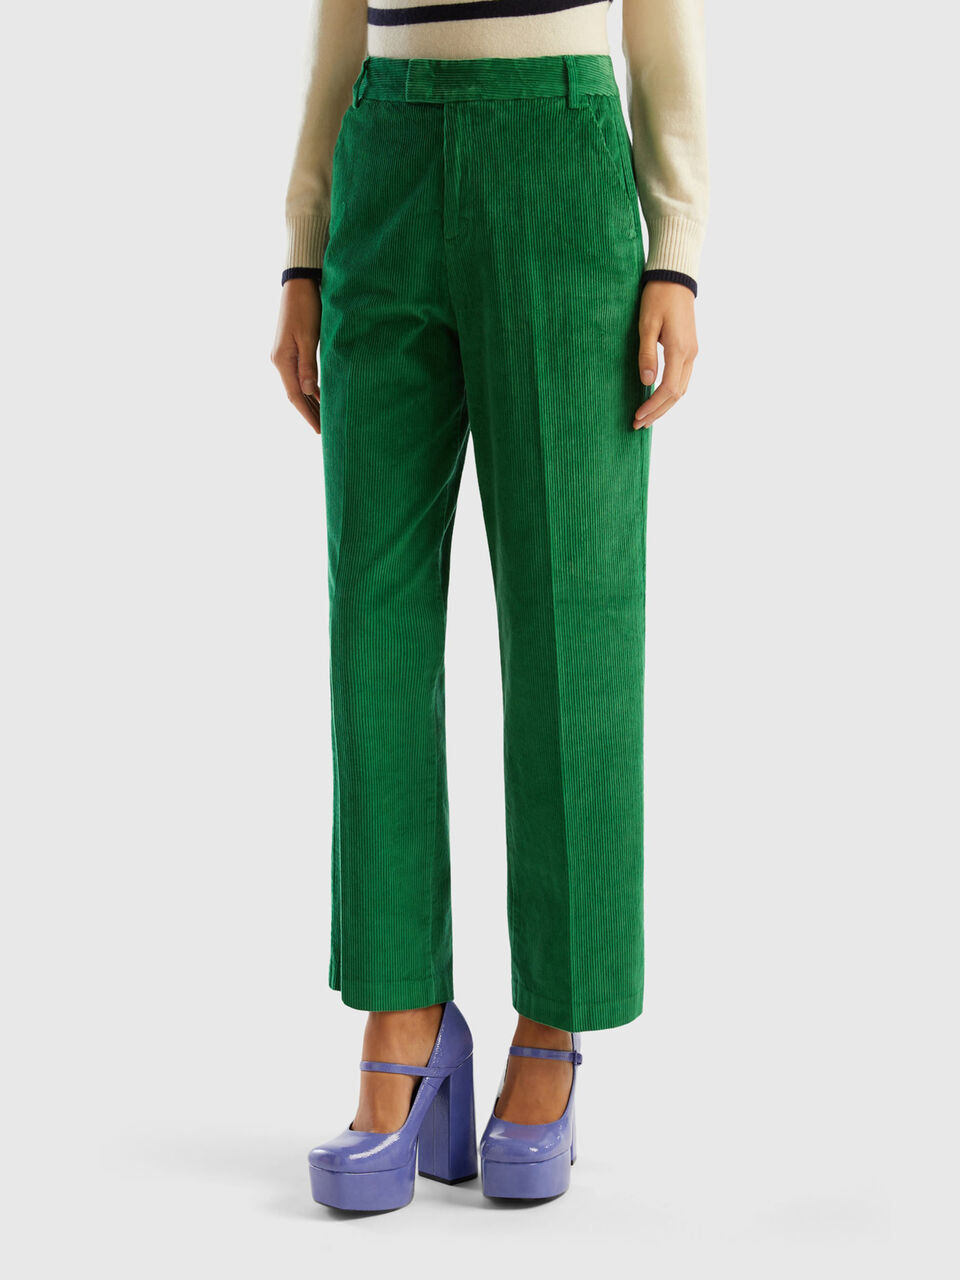 Women's Green Corduroy Pants